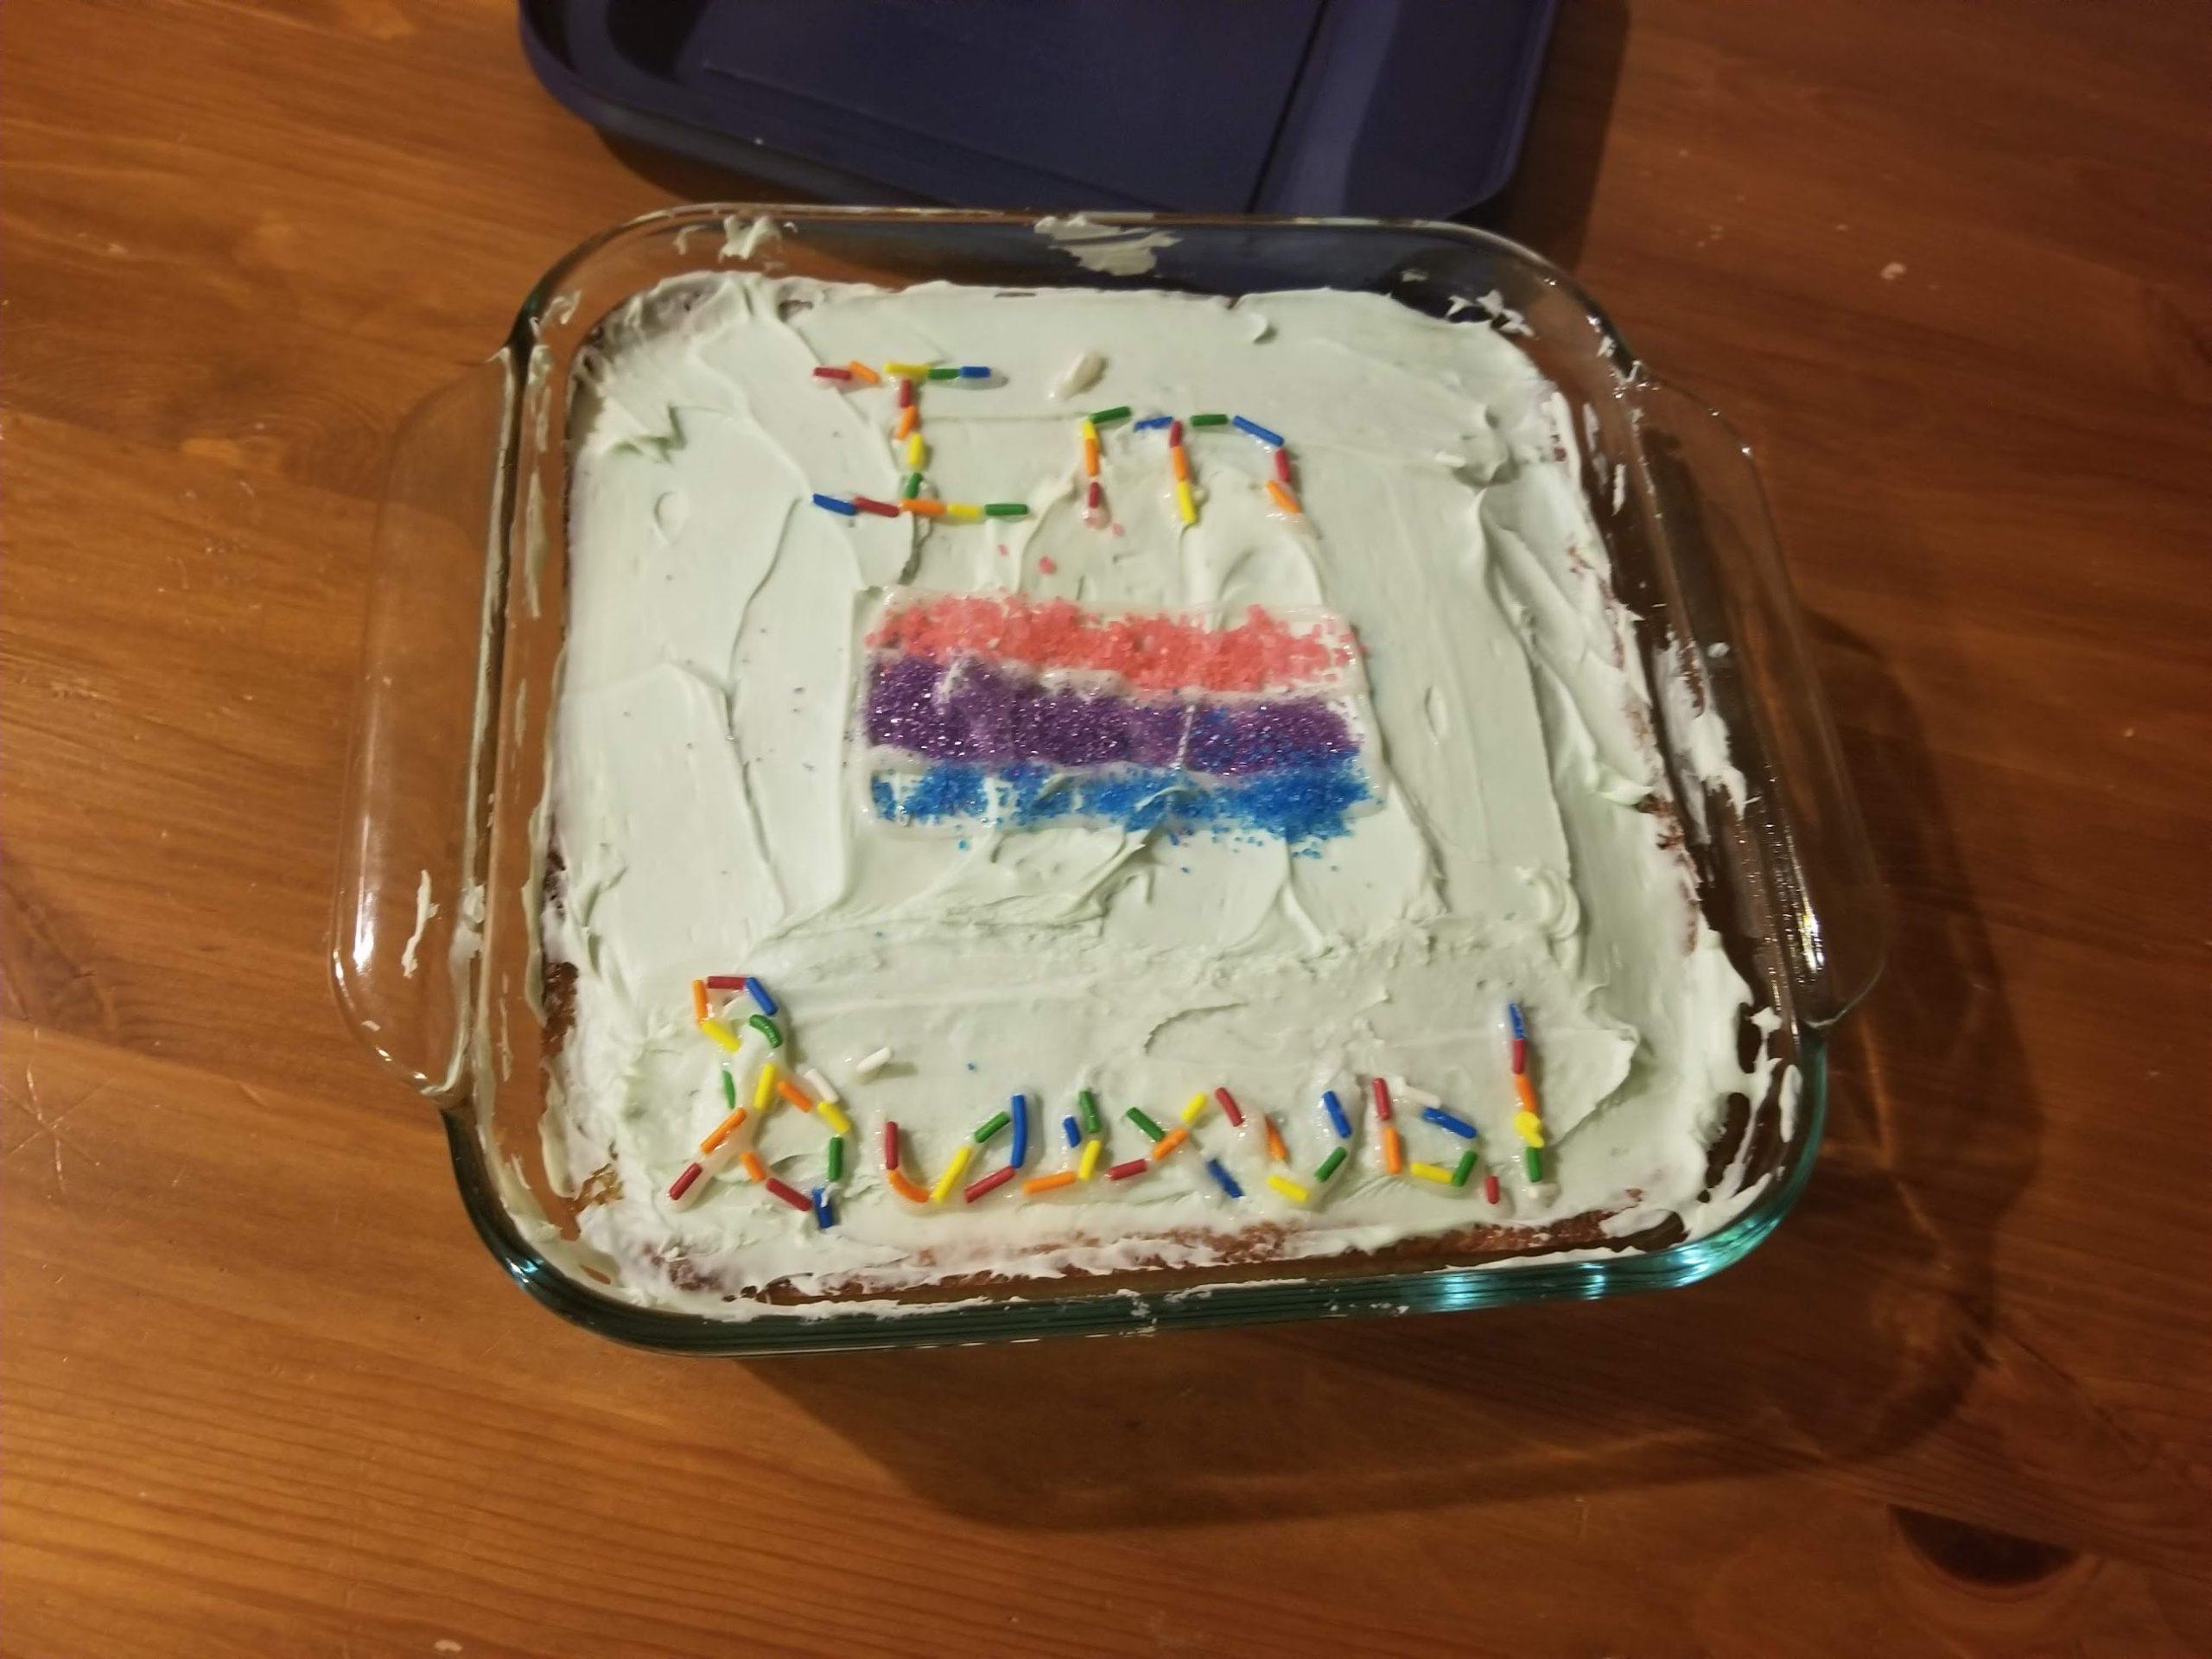 Cake featuring bisexual pride flag